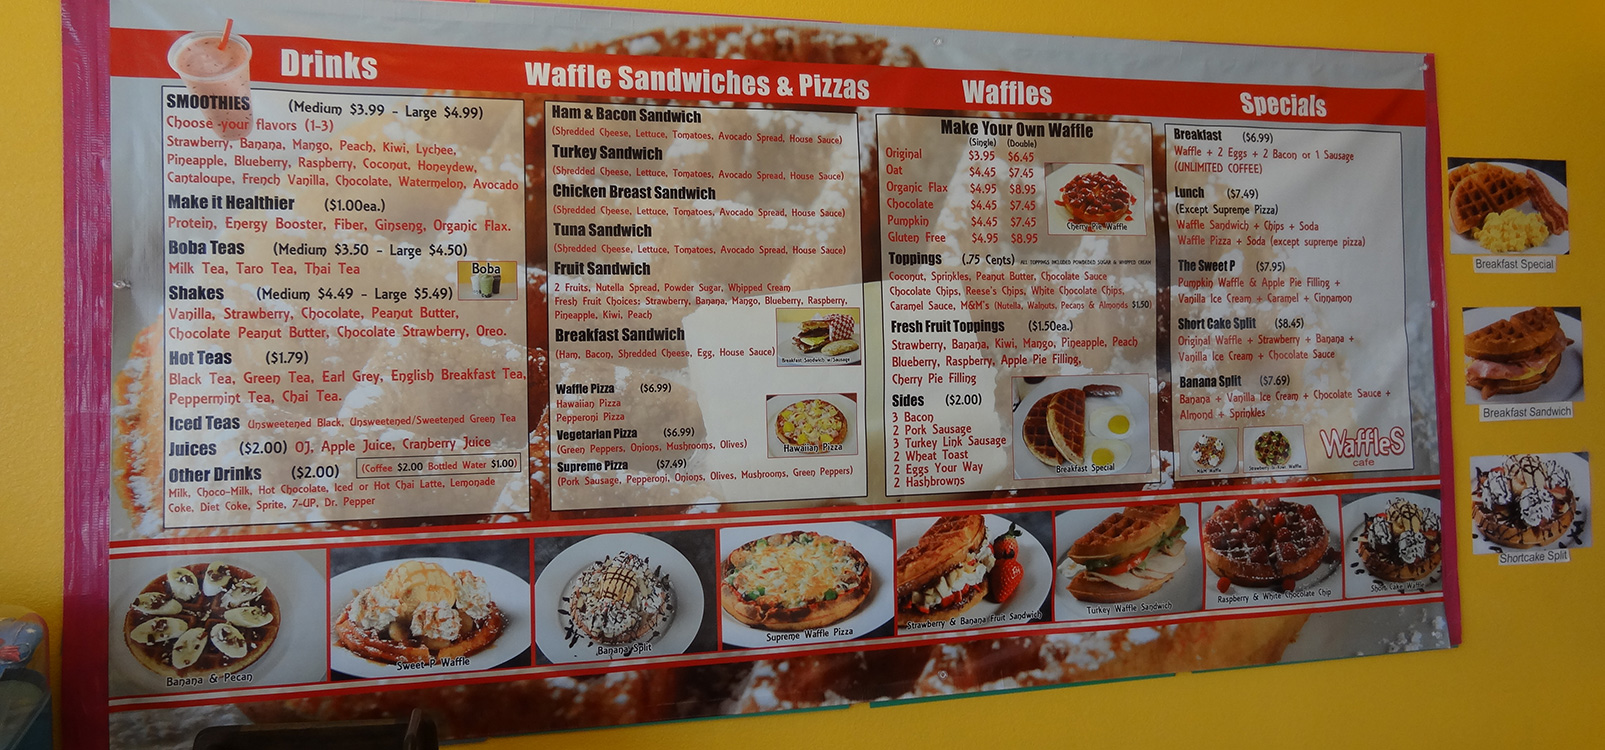 Waffle Menu, Waffles Cafe, Las Vegas